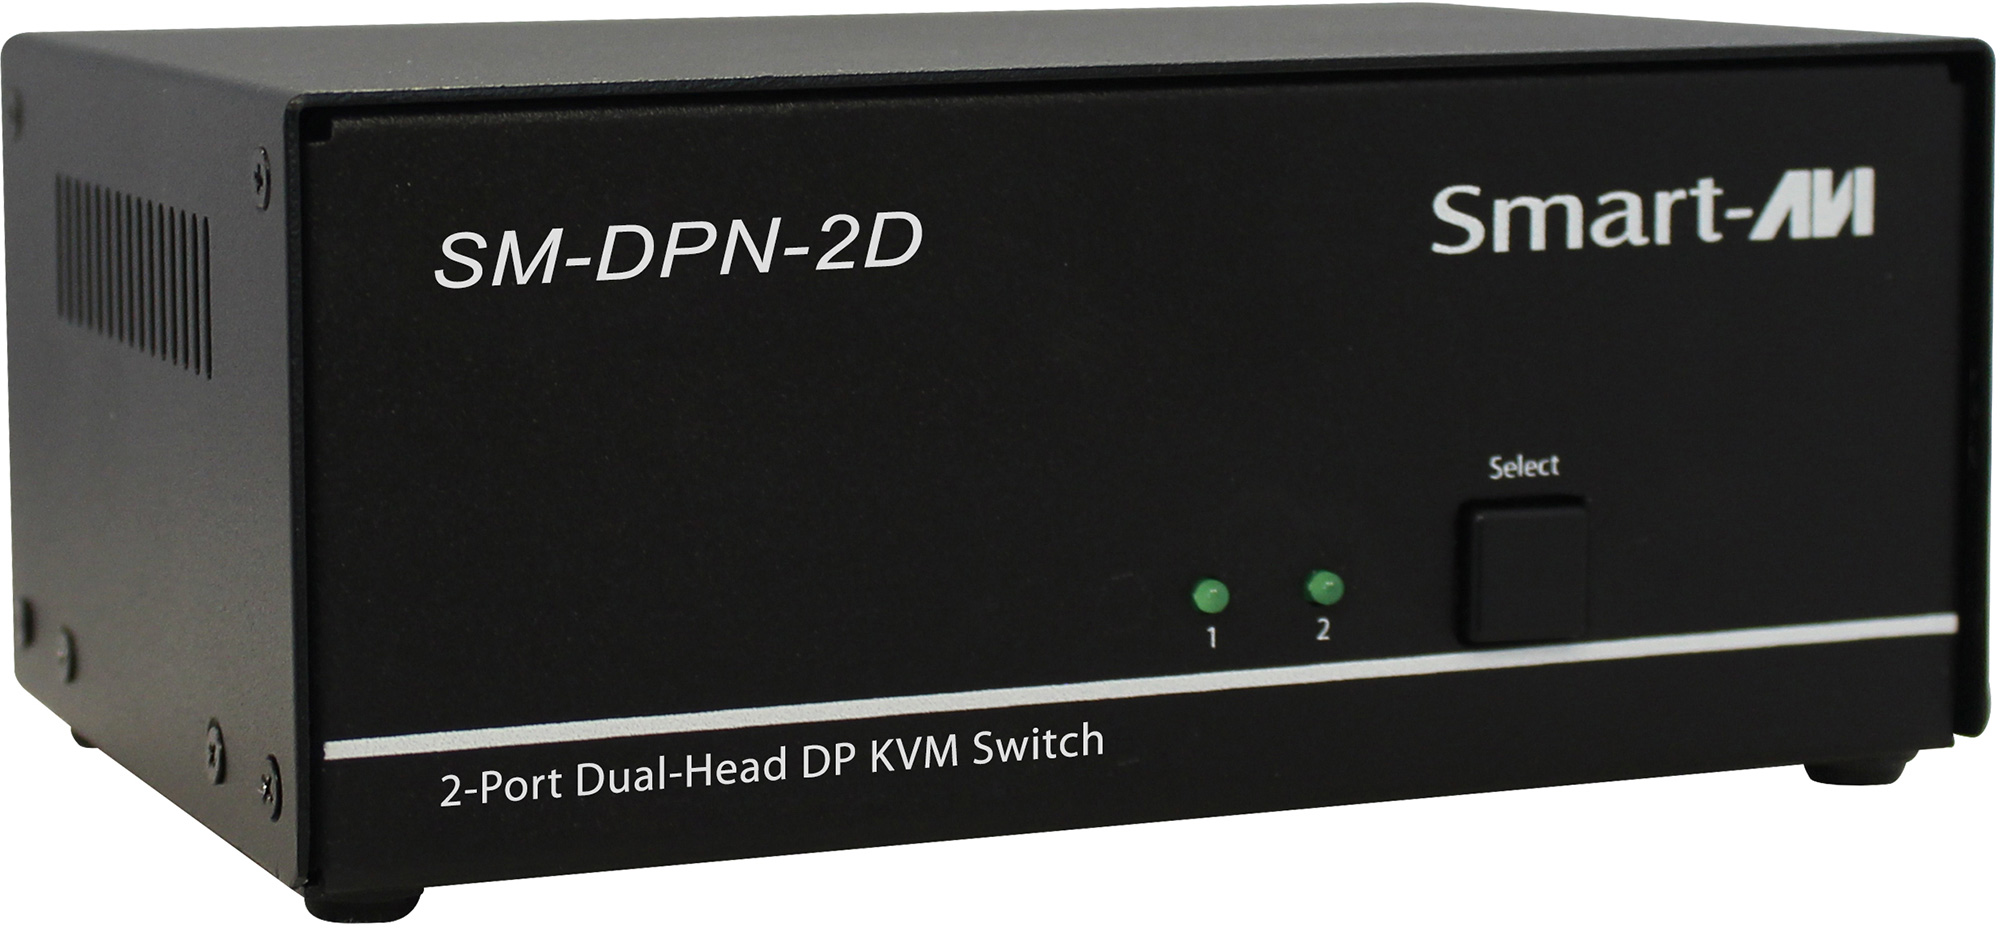 Smart AVI SM-DPN-2D Dual Head DisplayPort KVM Switch with Audio and USB 2.0 Support - 2 Port SAVI-SM-DPN-2D